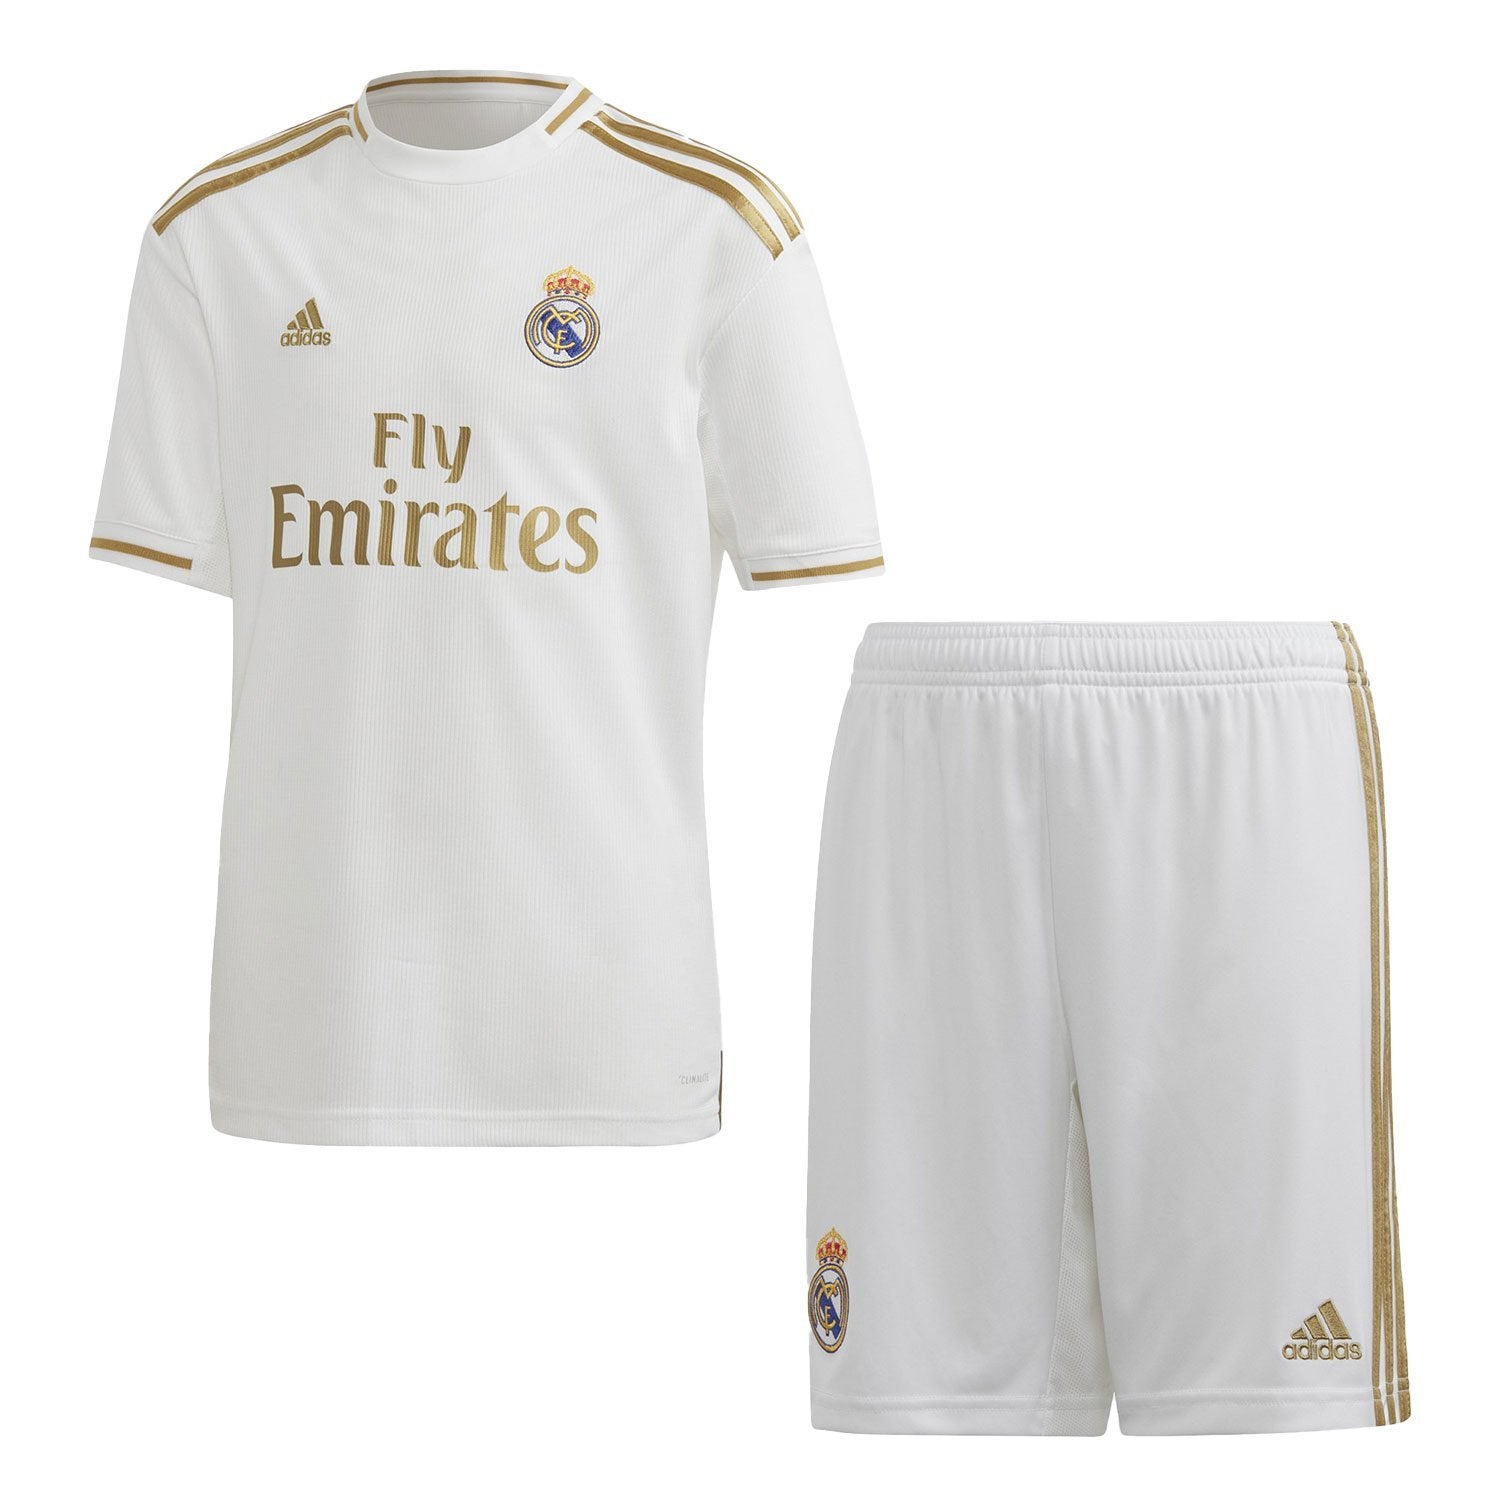 Real Madrid Youth Home Mini Kit 19/20 